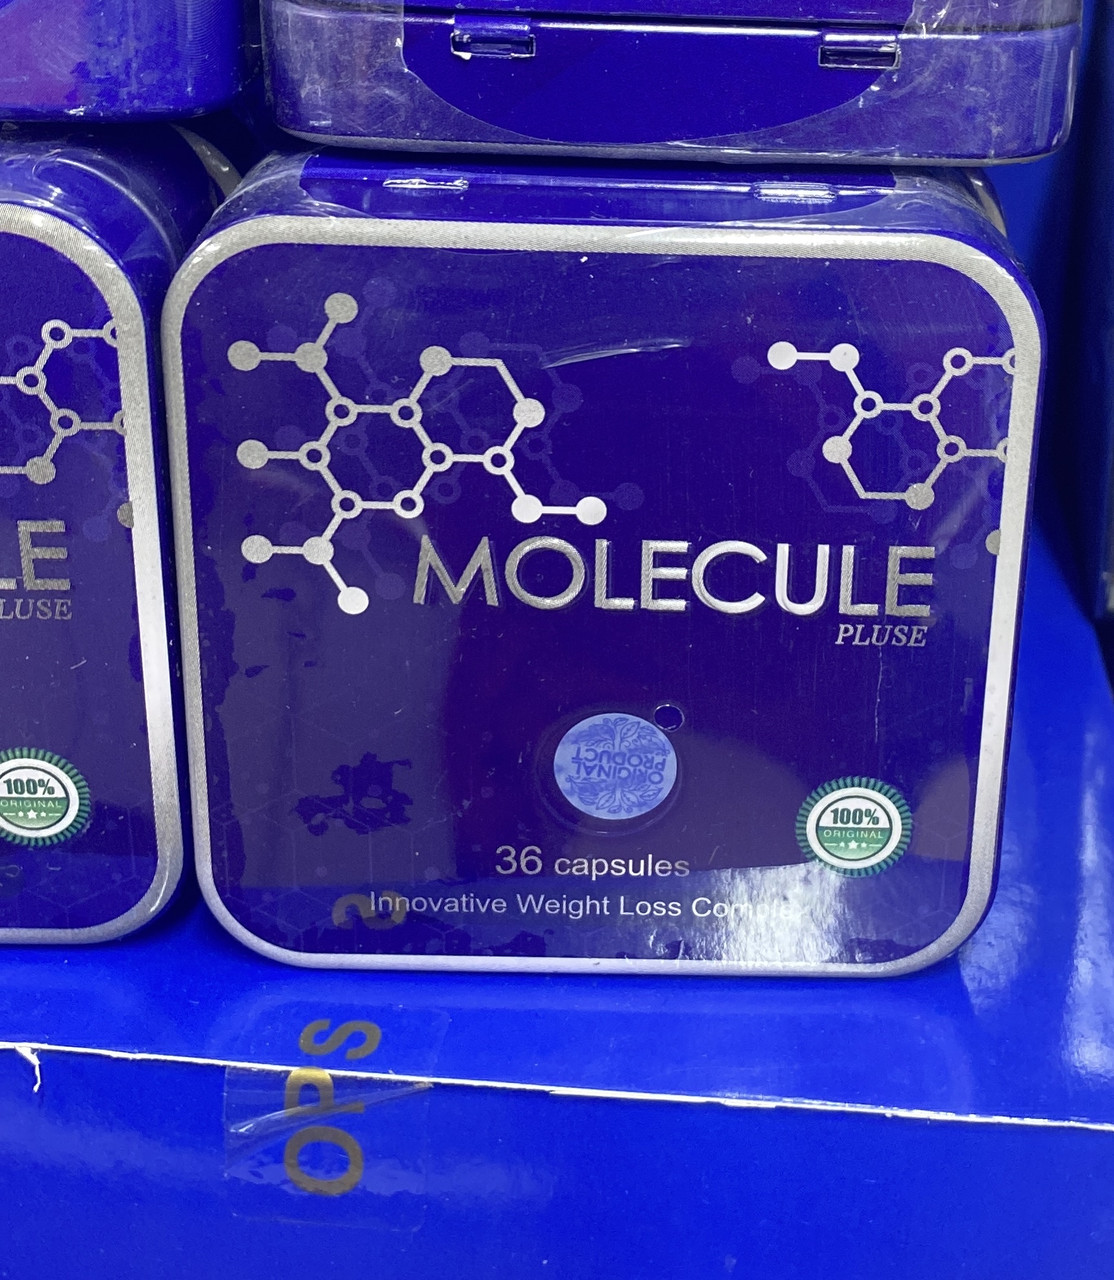 Molecule Plus Малекула